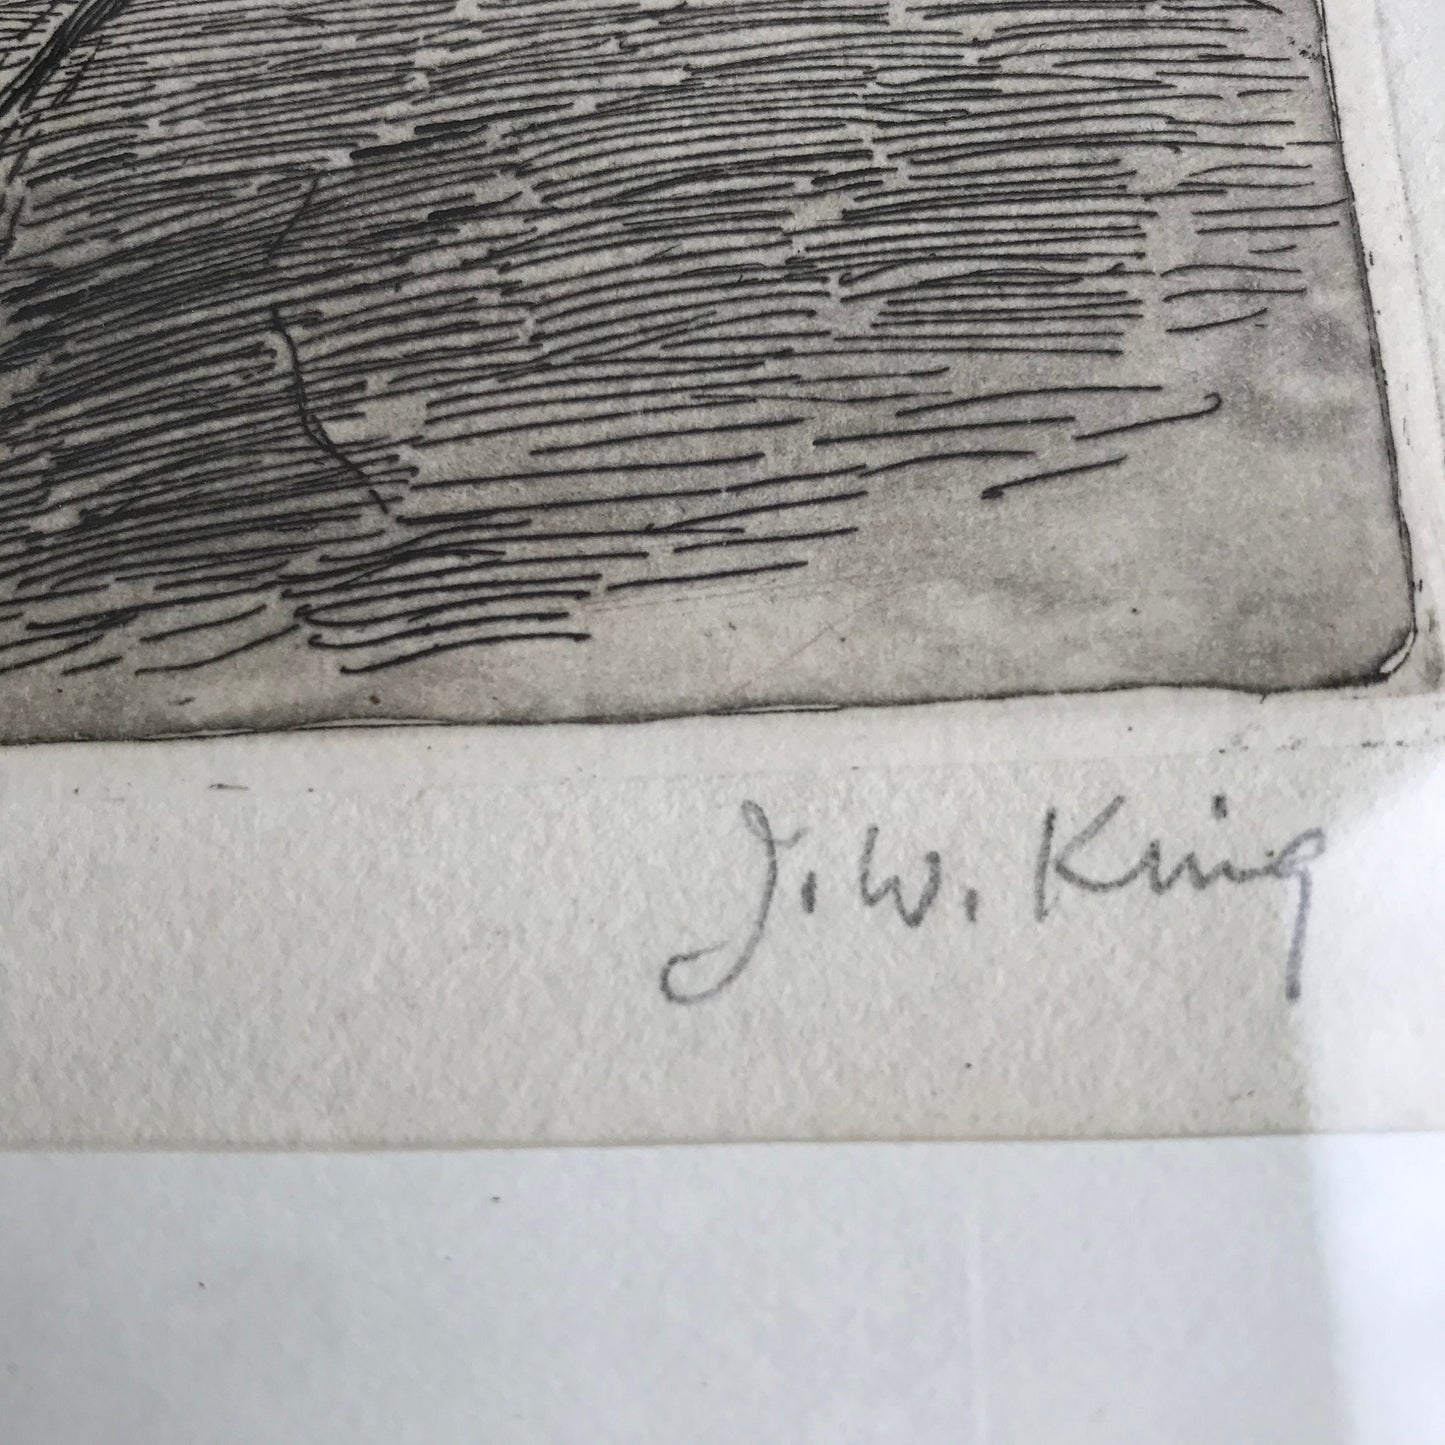 Original etching by J.W. King